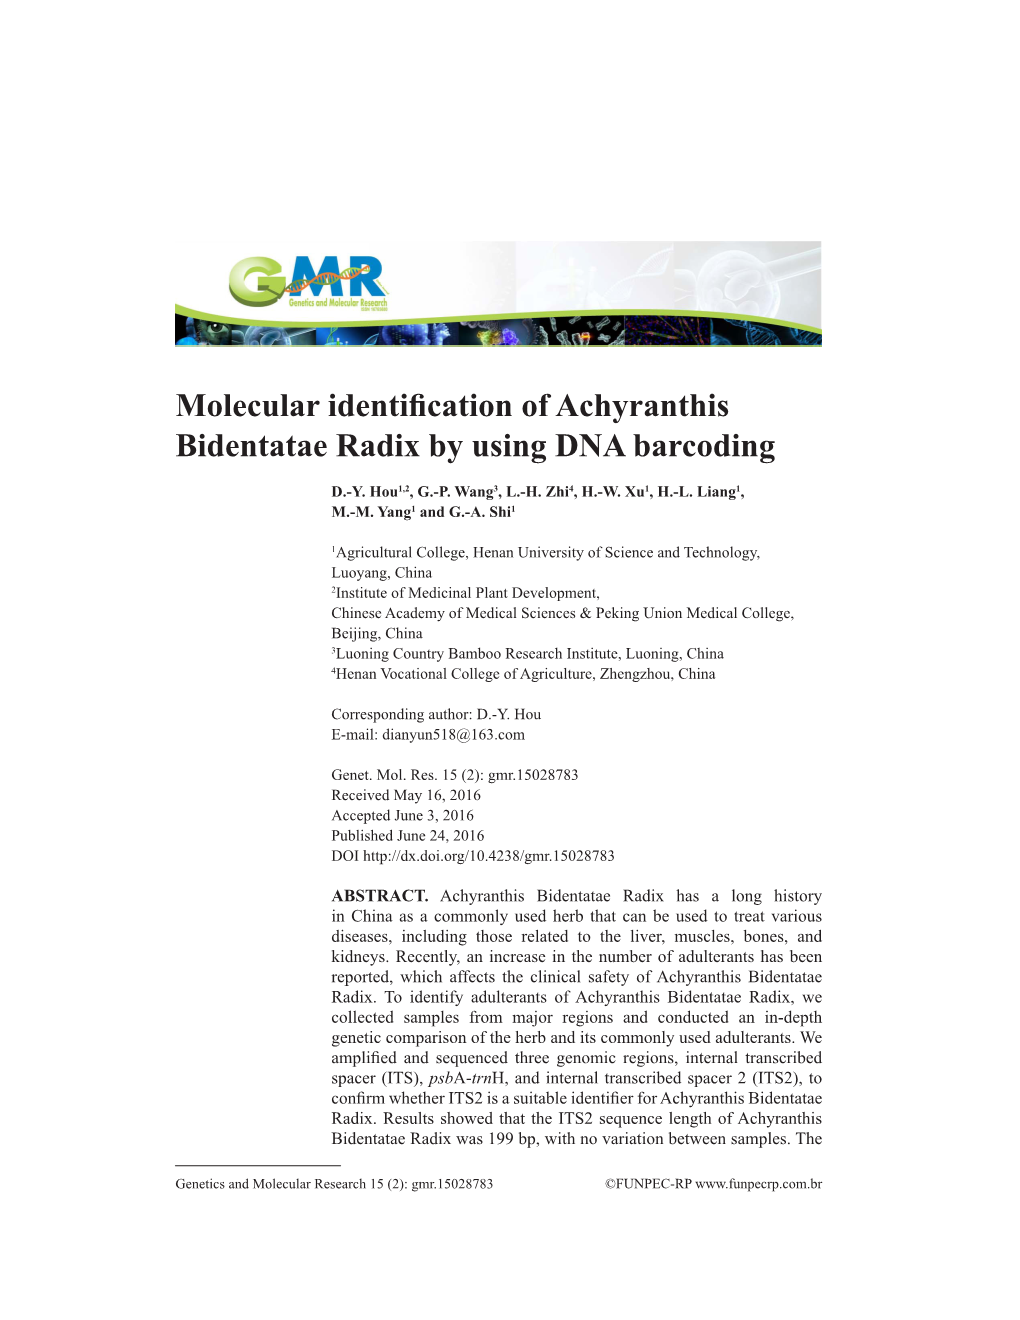 Molecular Identification of Achyranthis Bidentatae Radix by Using DNA Barcoding